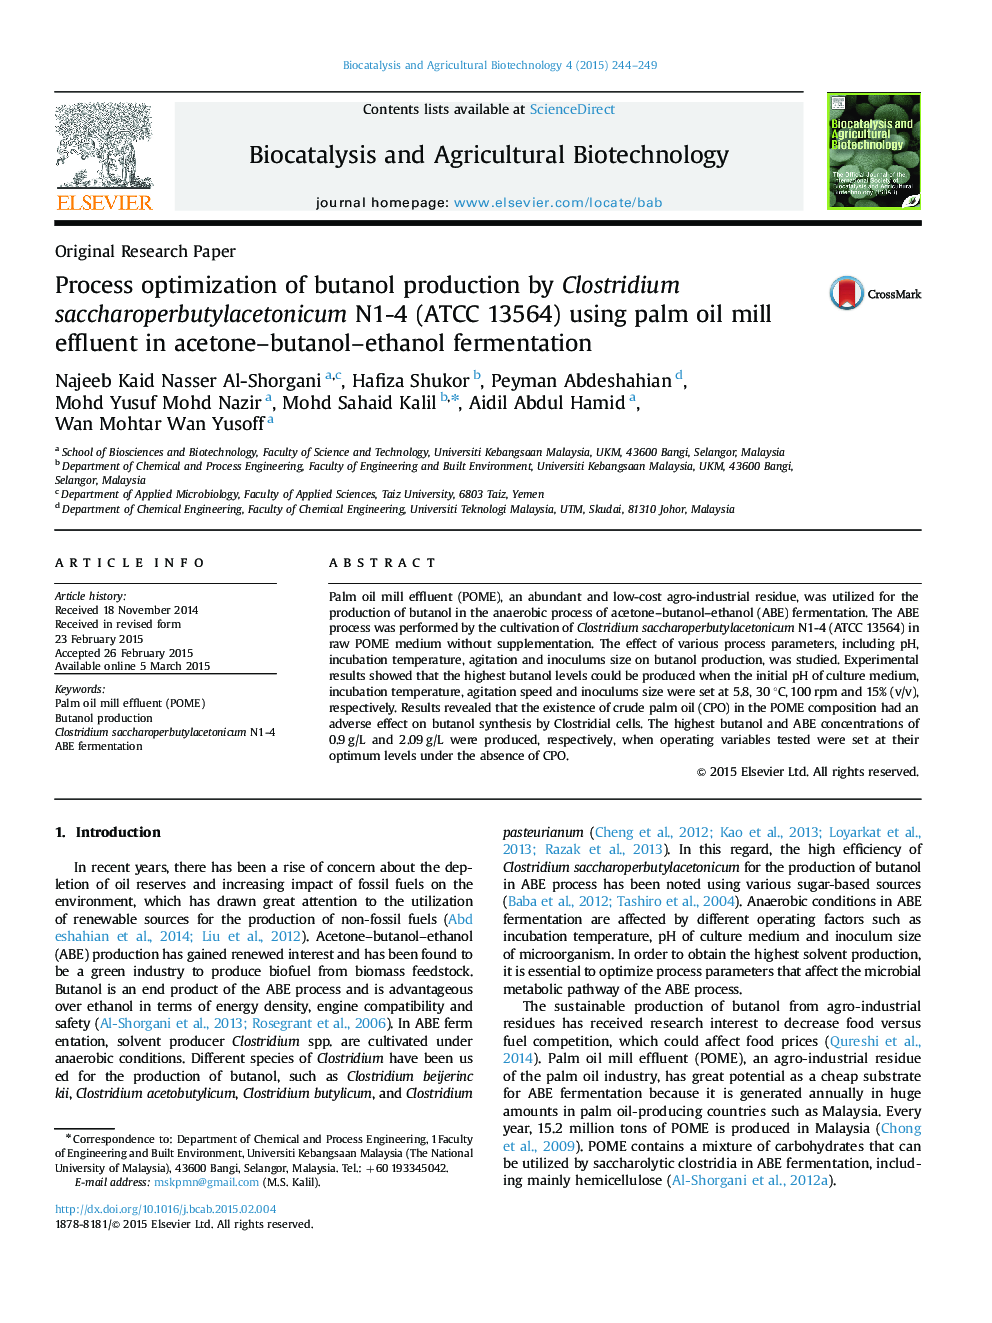 Process optimization of butanol production by Clostridium saccharoperbutylacetonicum N1-4 (ATCC 13564) using palm oil mill effluent in acetone–butanol–ethanol fermentation